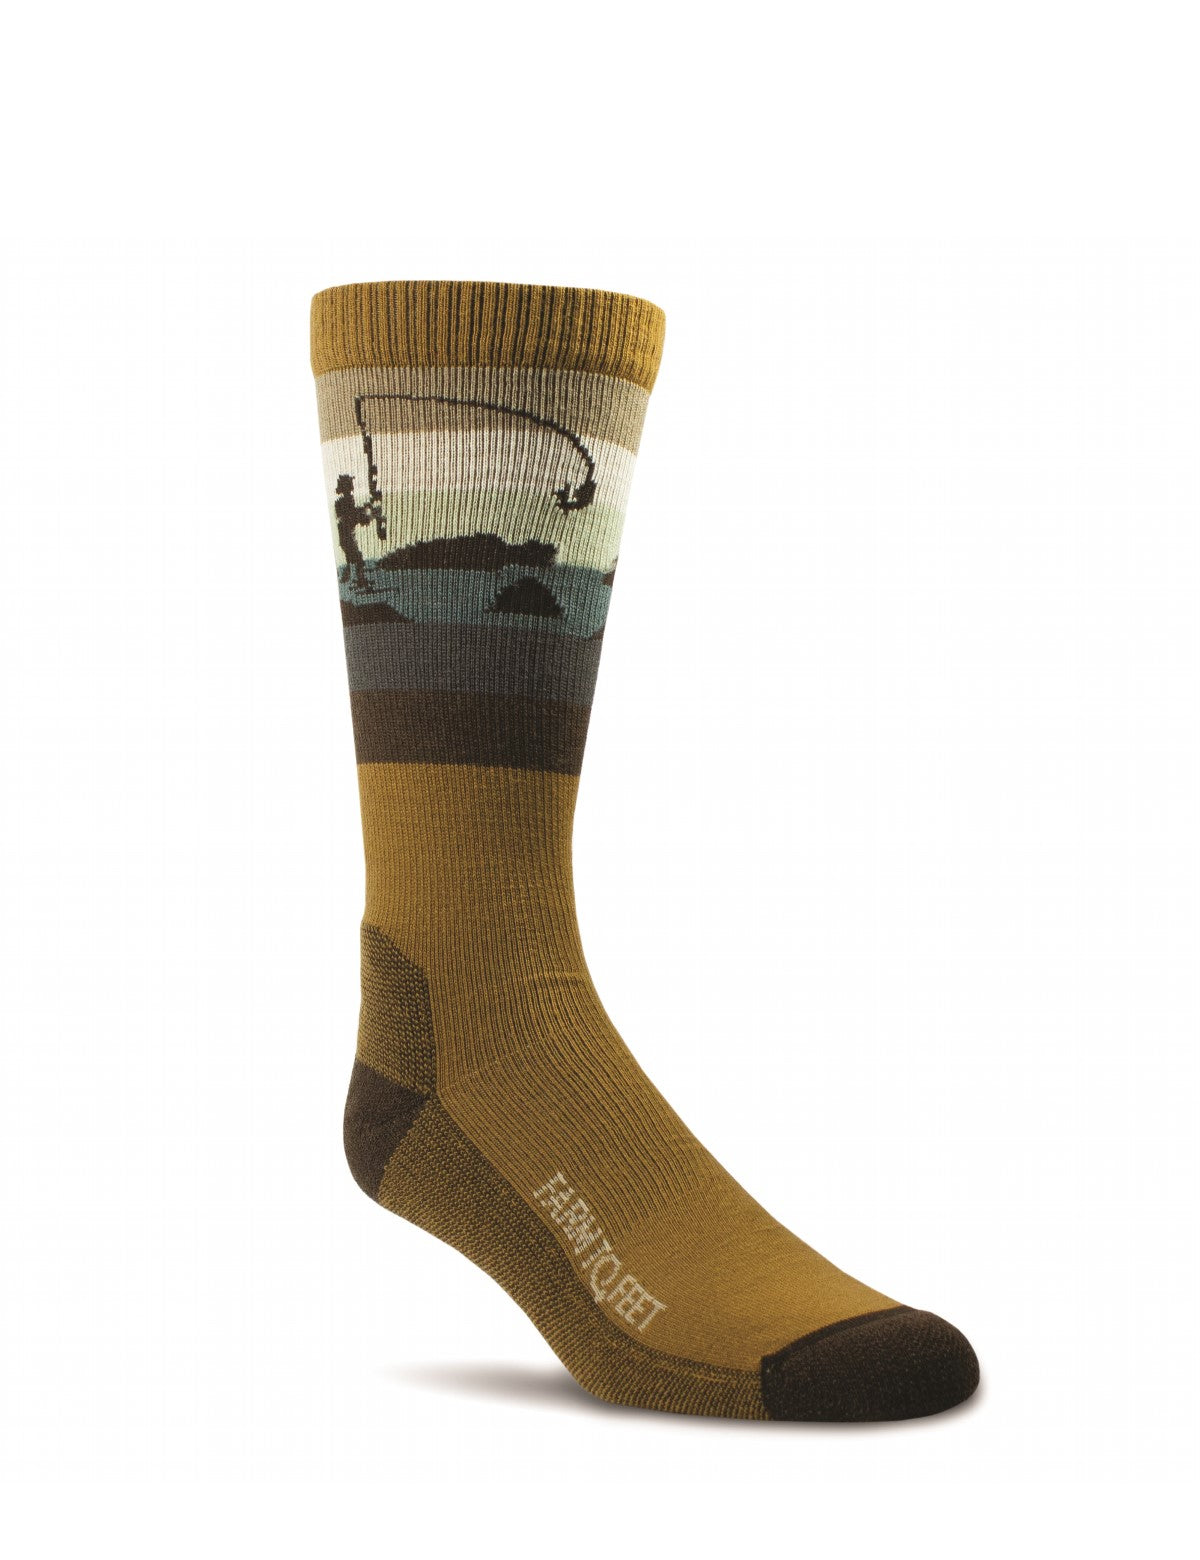 Farm to Feet Socks - Men's Everyday Collection | Farm to Feet